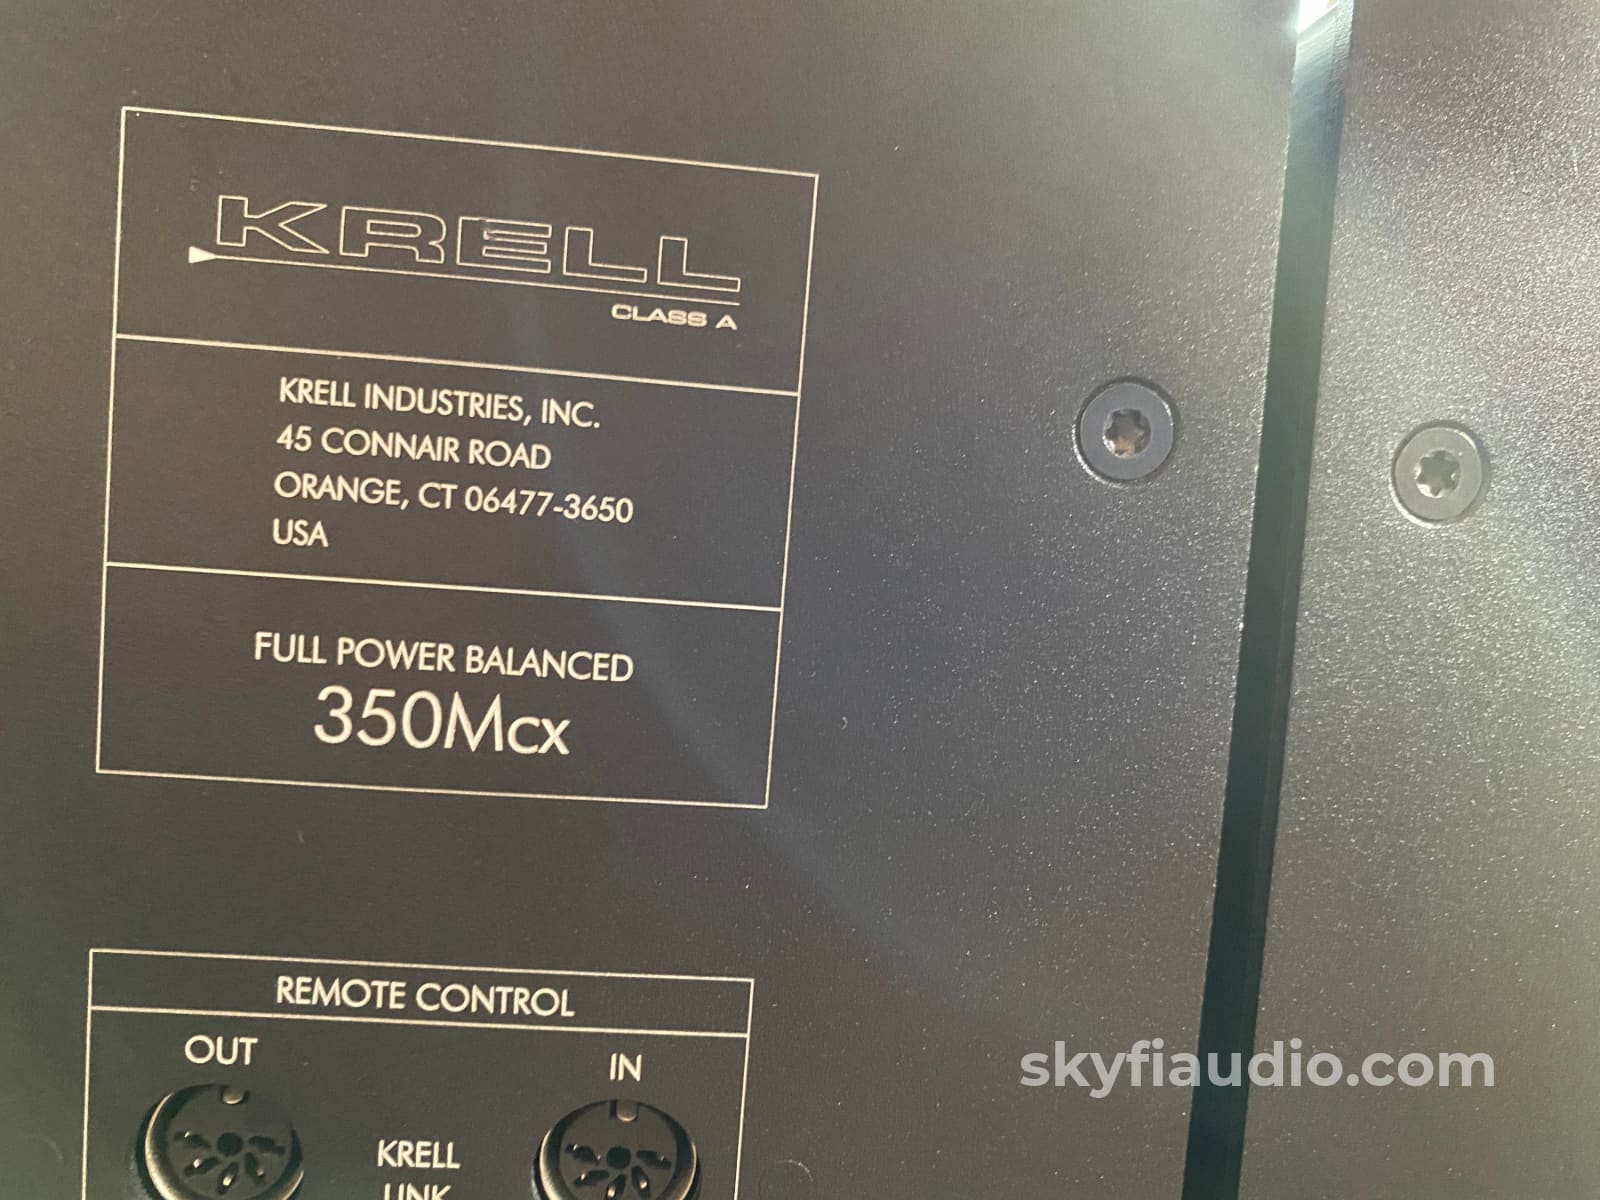 Krell Full Power Balanced X Series Fpb 350Mcx Monoblock Amplifiers 350-700-1400 Watts! Serviced By